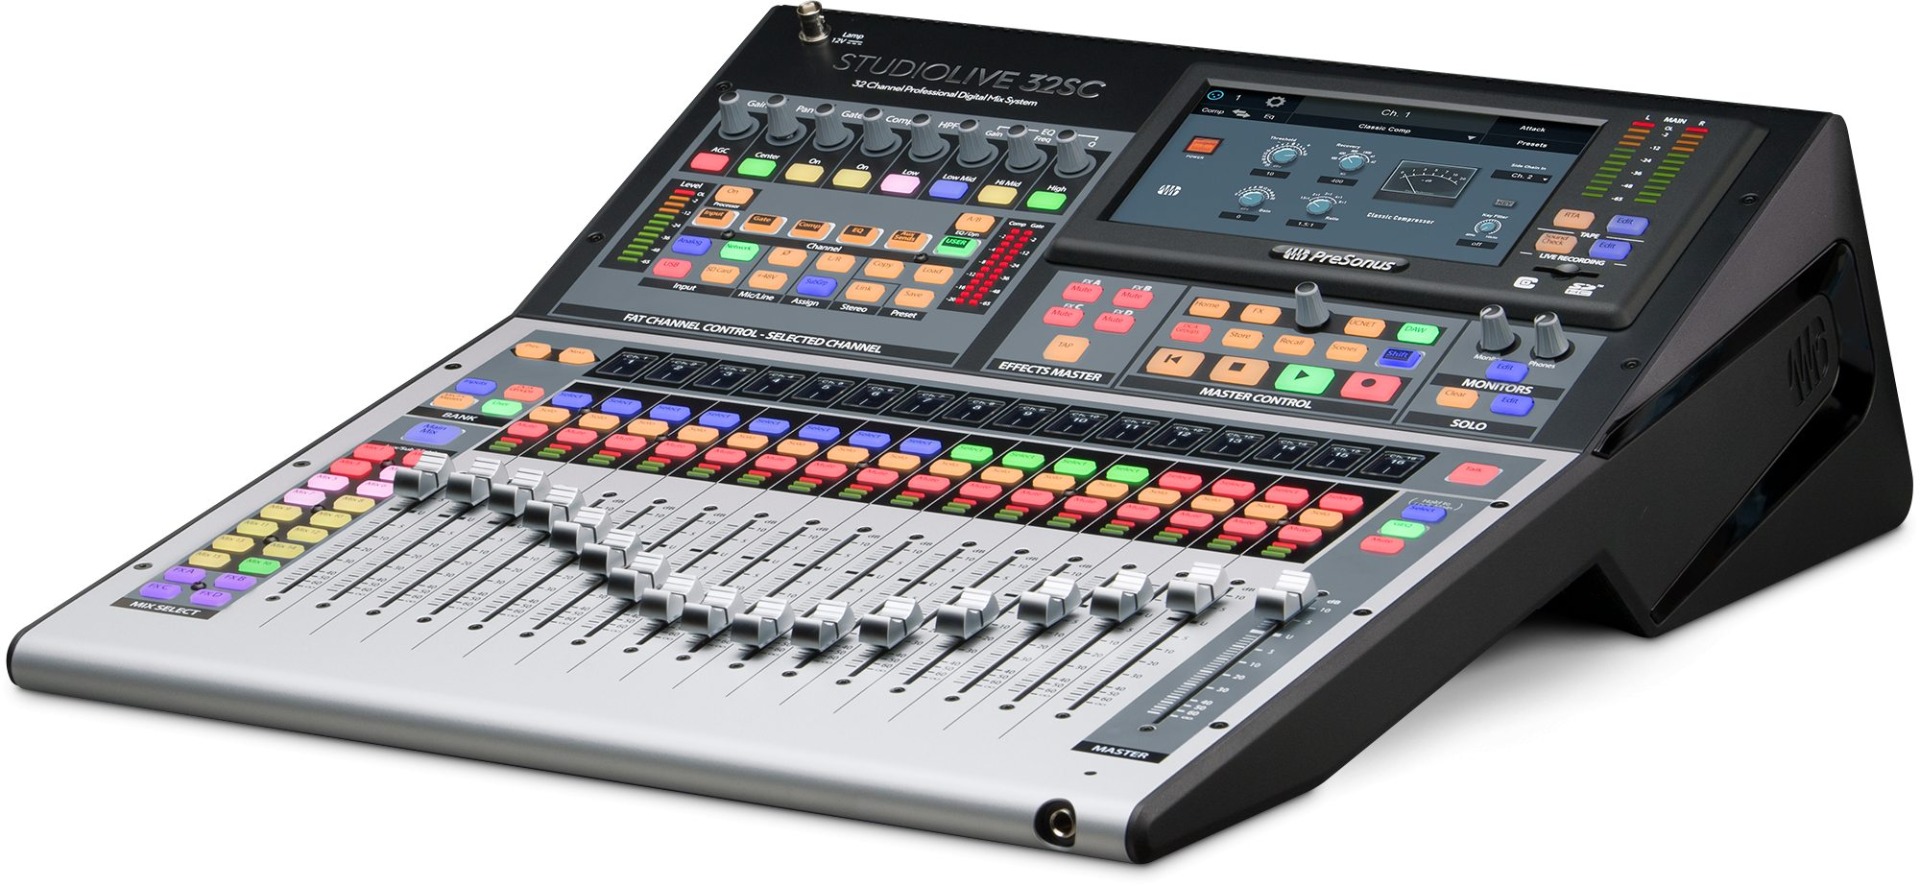 Presonus StudioLive 32SC - 32-channel Digital Mixer USB Audio Interface